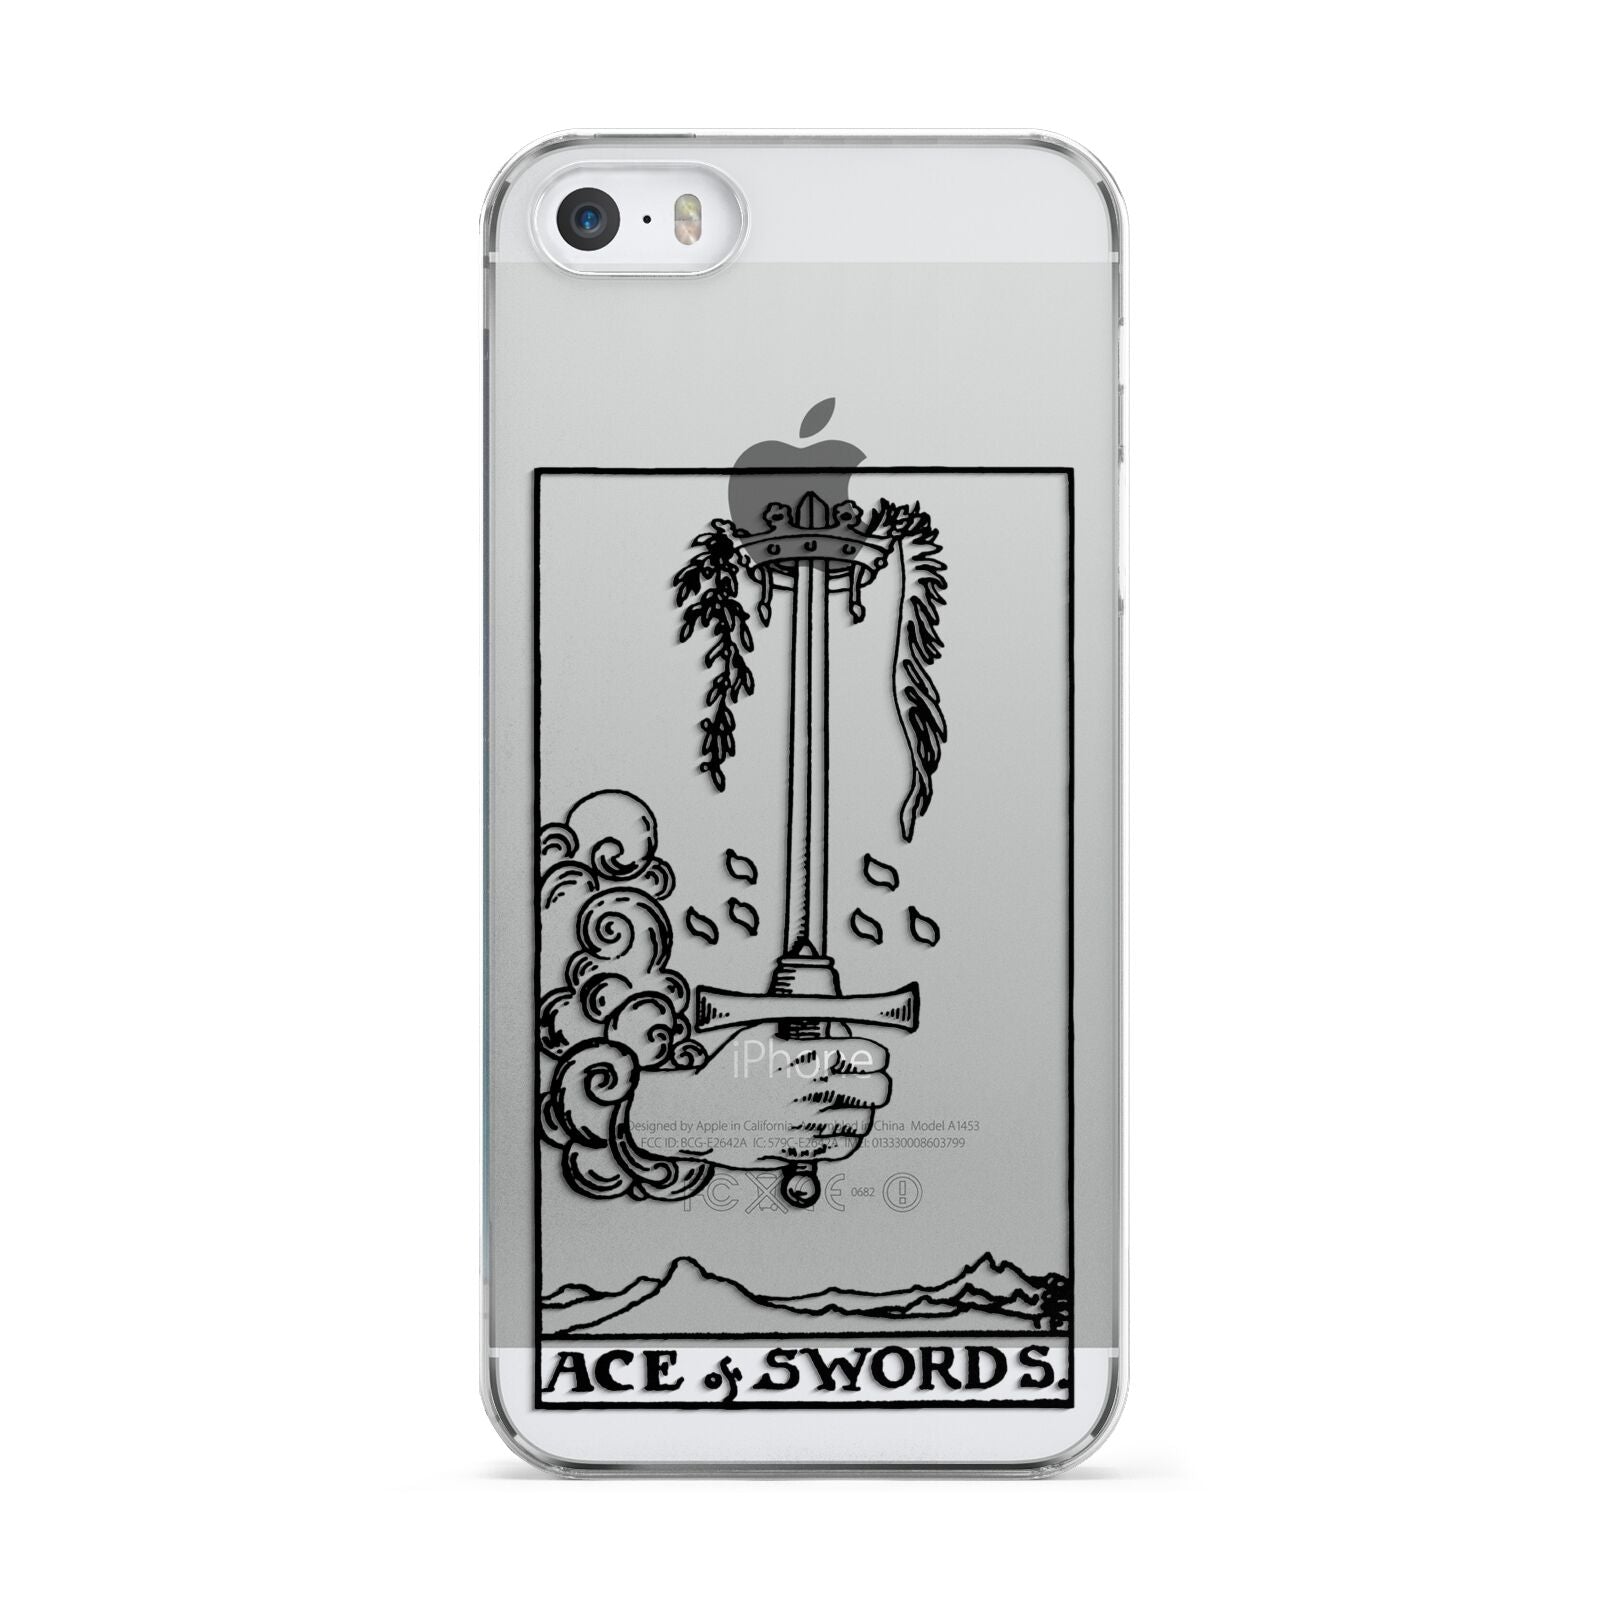 Ace of Swords Monochrome Apple iPhone 5 Case